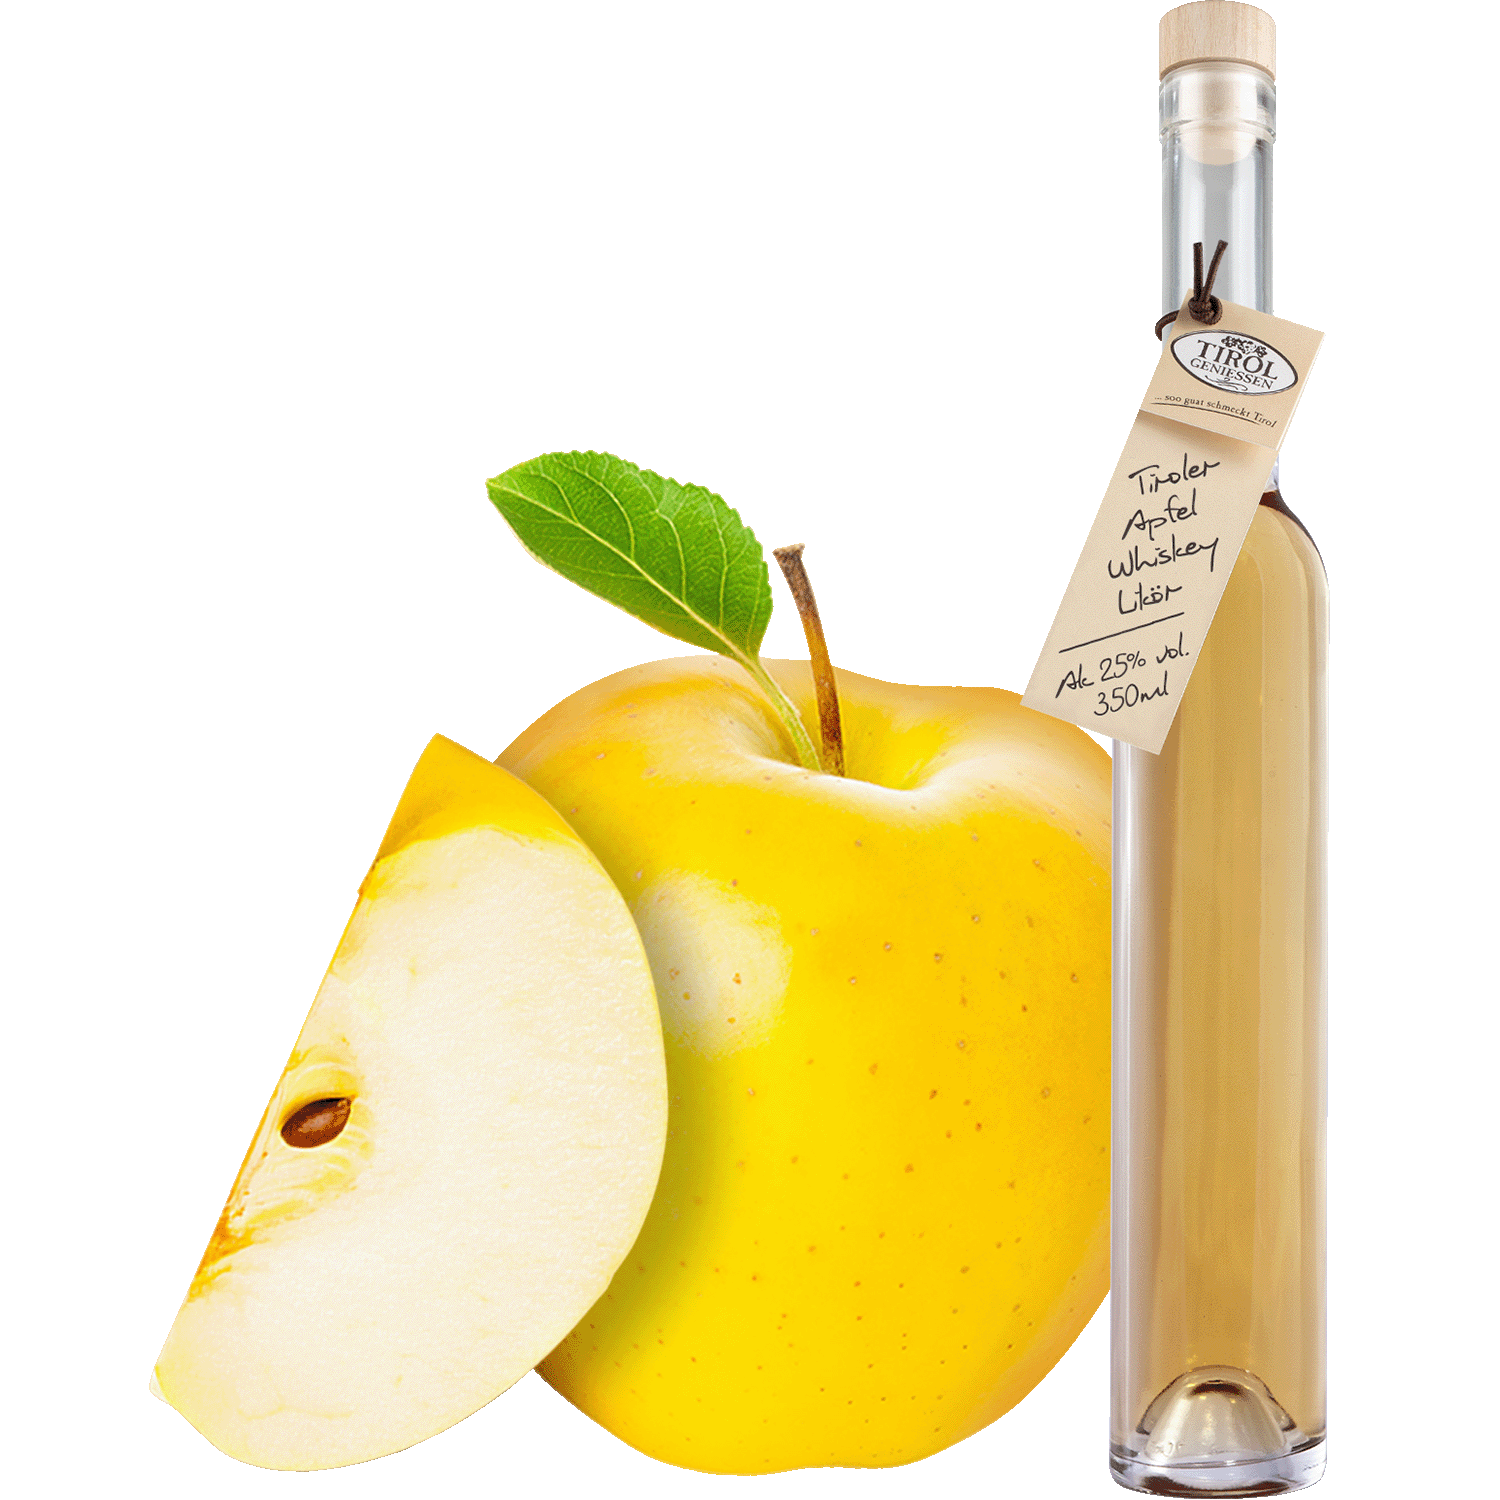 Apple Whiskey Liqueur in gift bottle from Austria from Tirol Geniessen